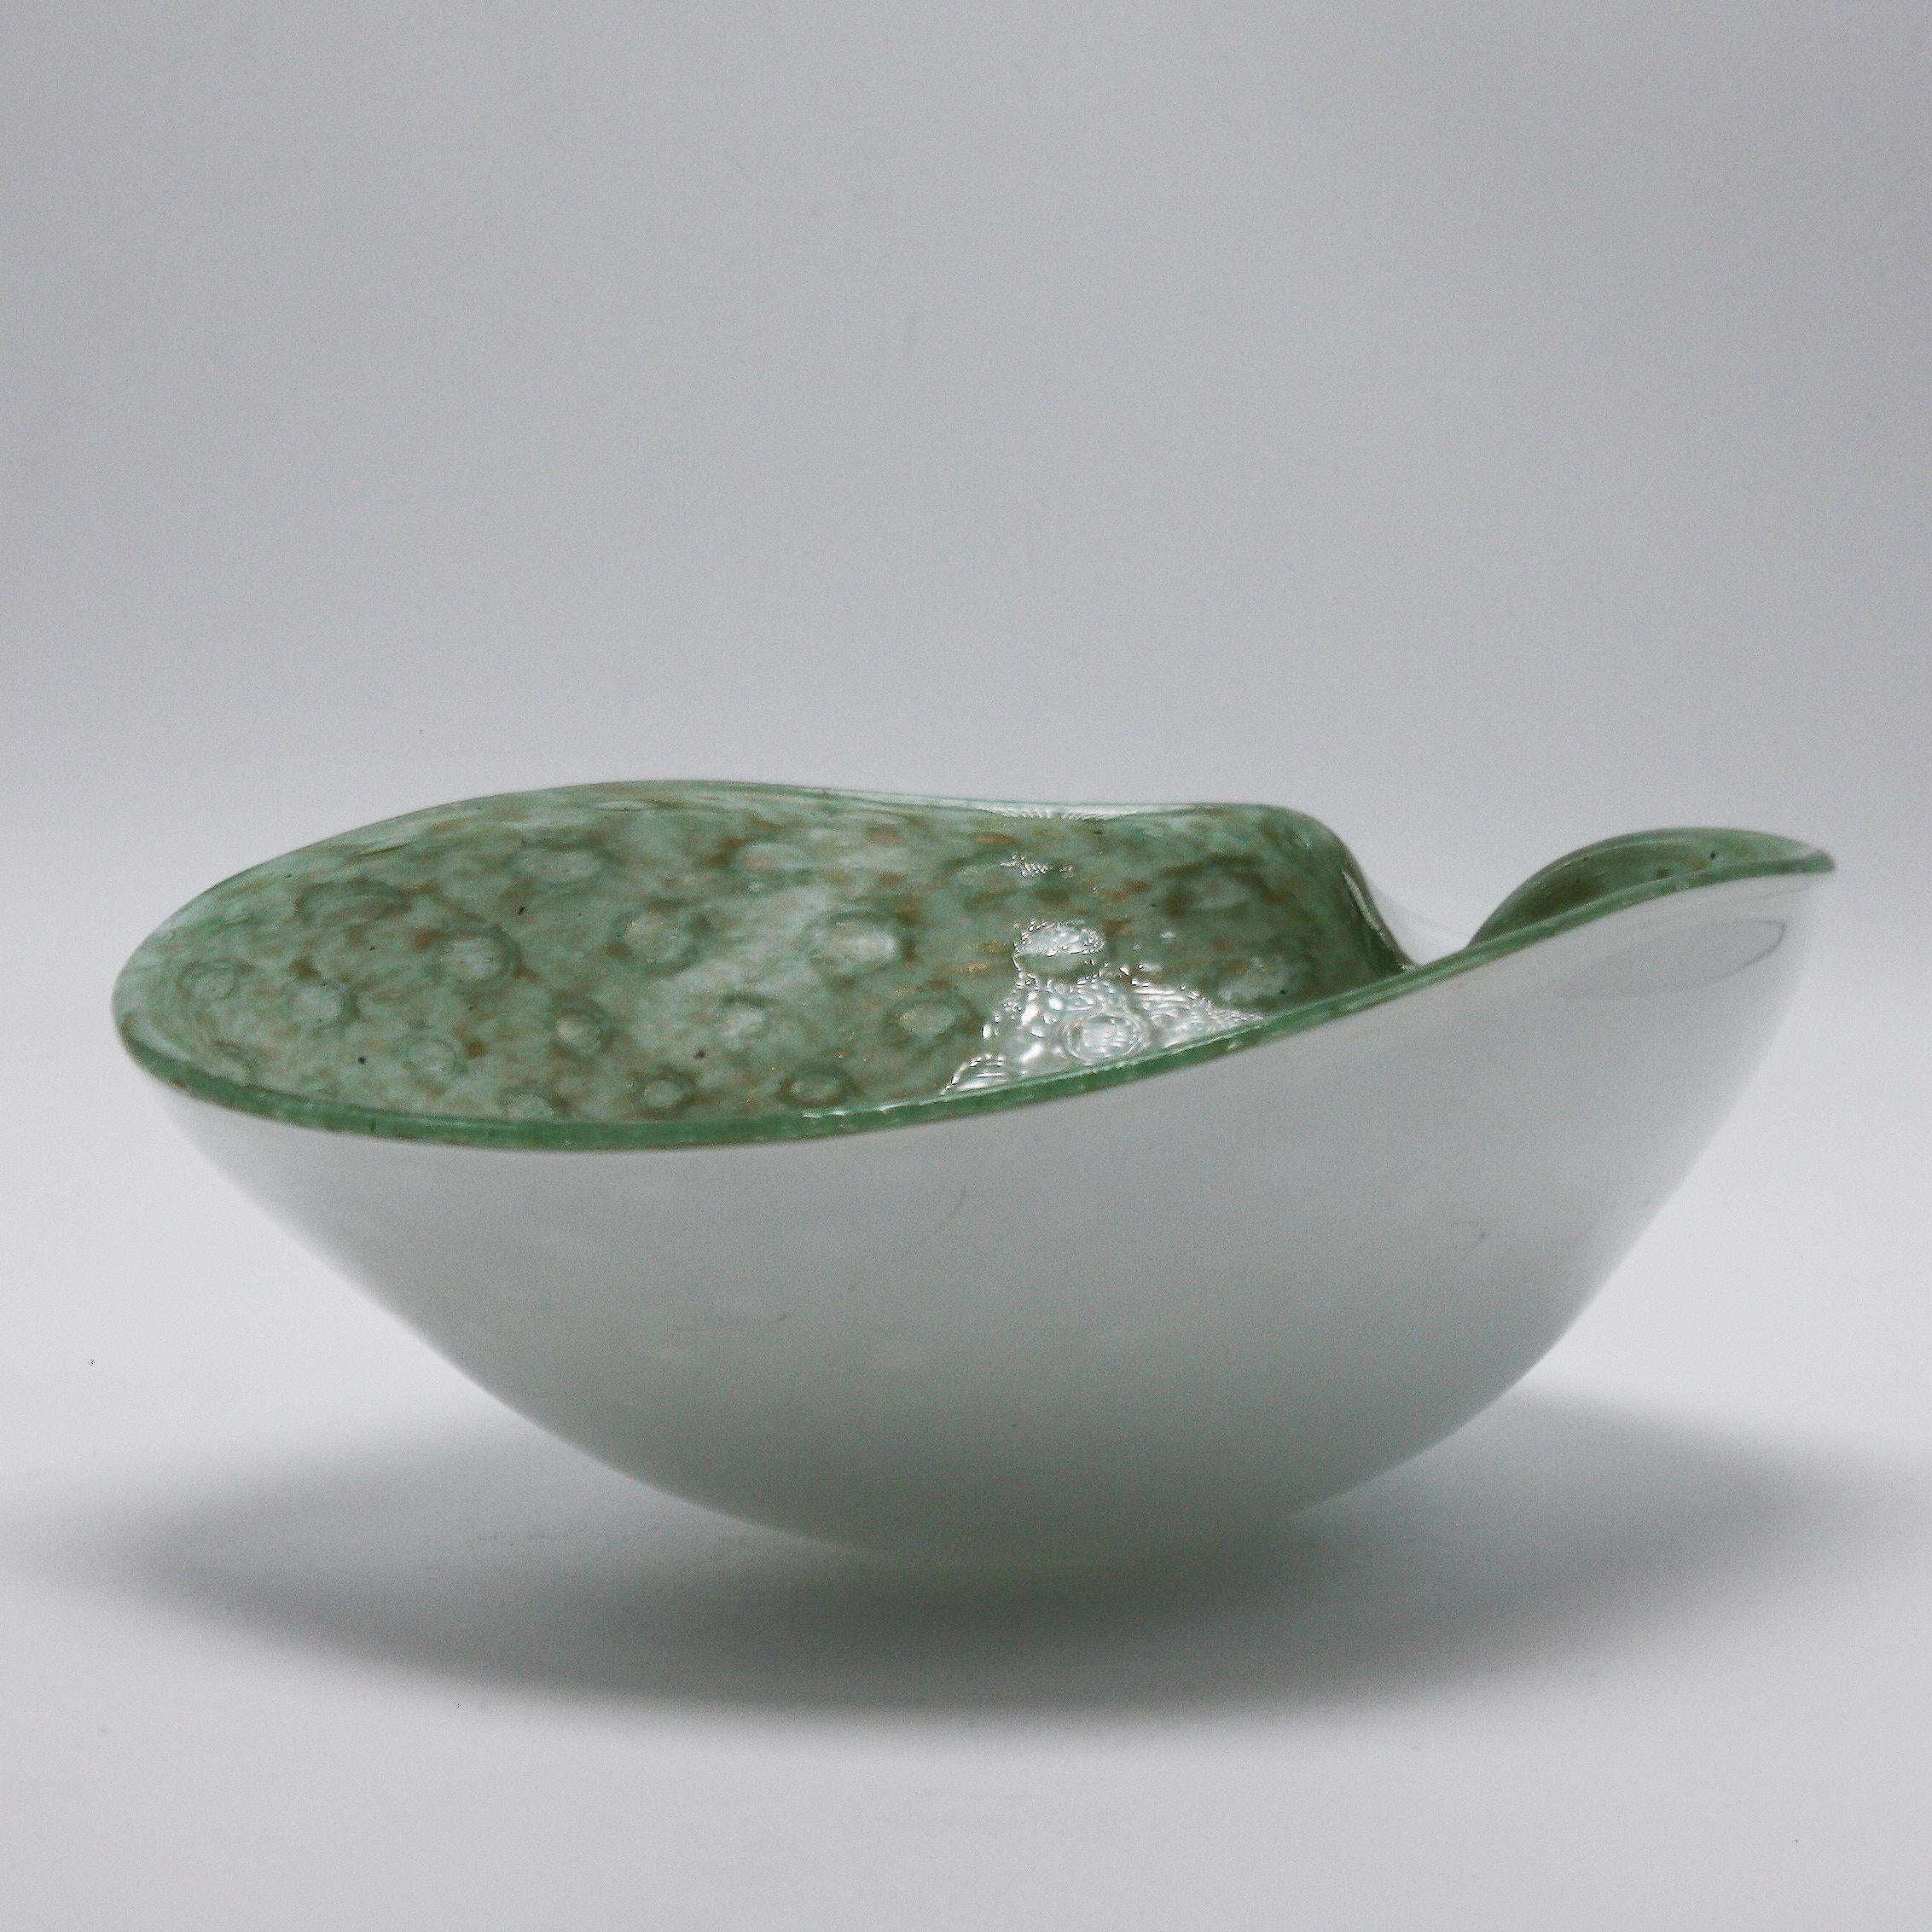 Murano glass bowl with gold flecks, circa 1960.
 